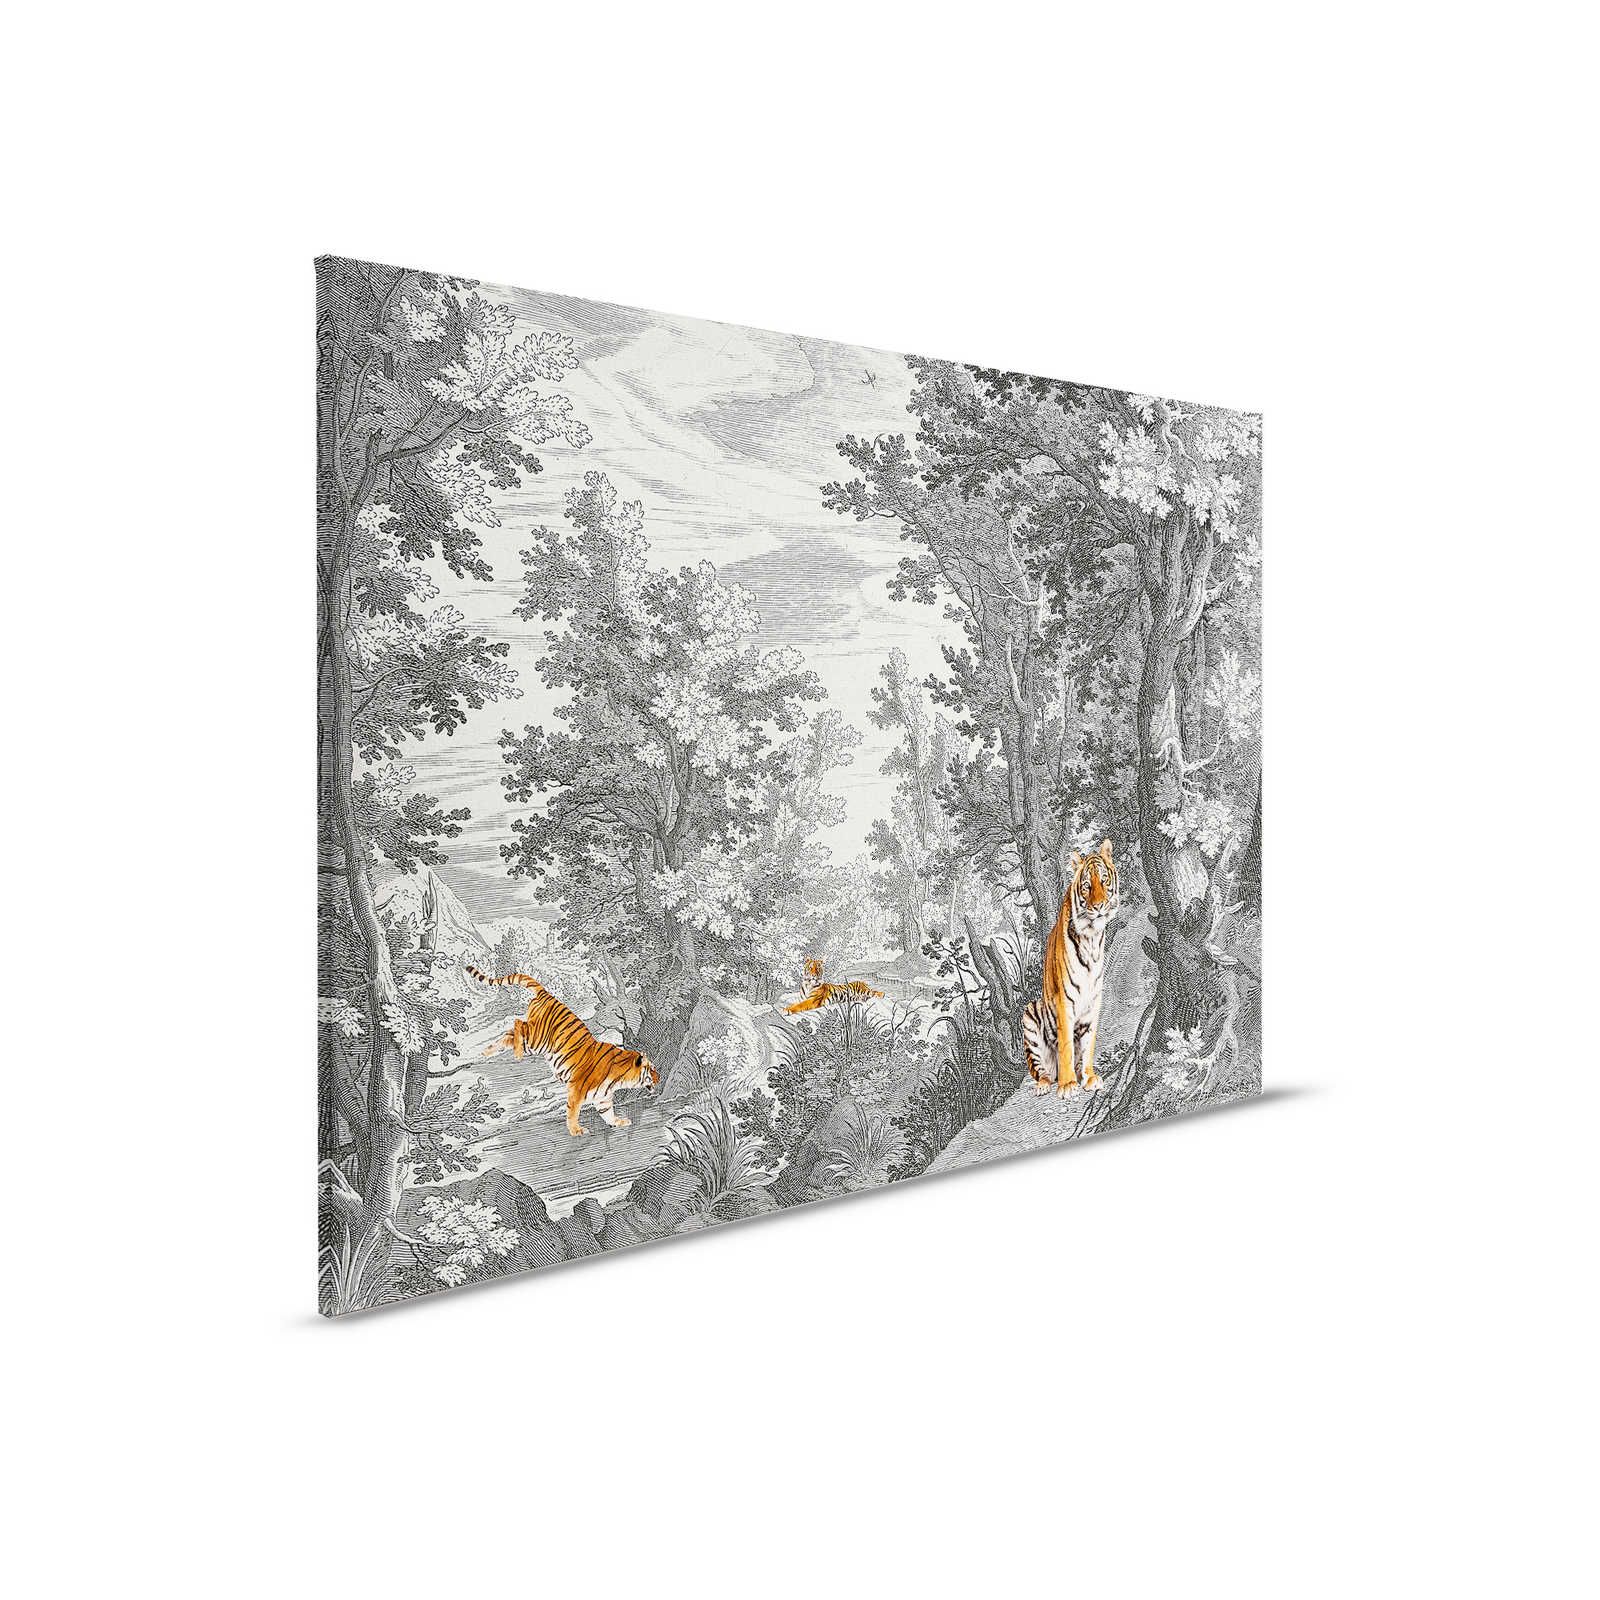         Fancy Forest 2 - Leinwandbild Landschaftsbild Klassik mit Tiger – 0,90 m x 0,60 m
    